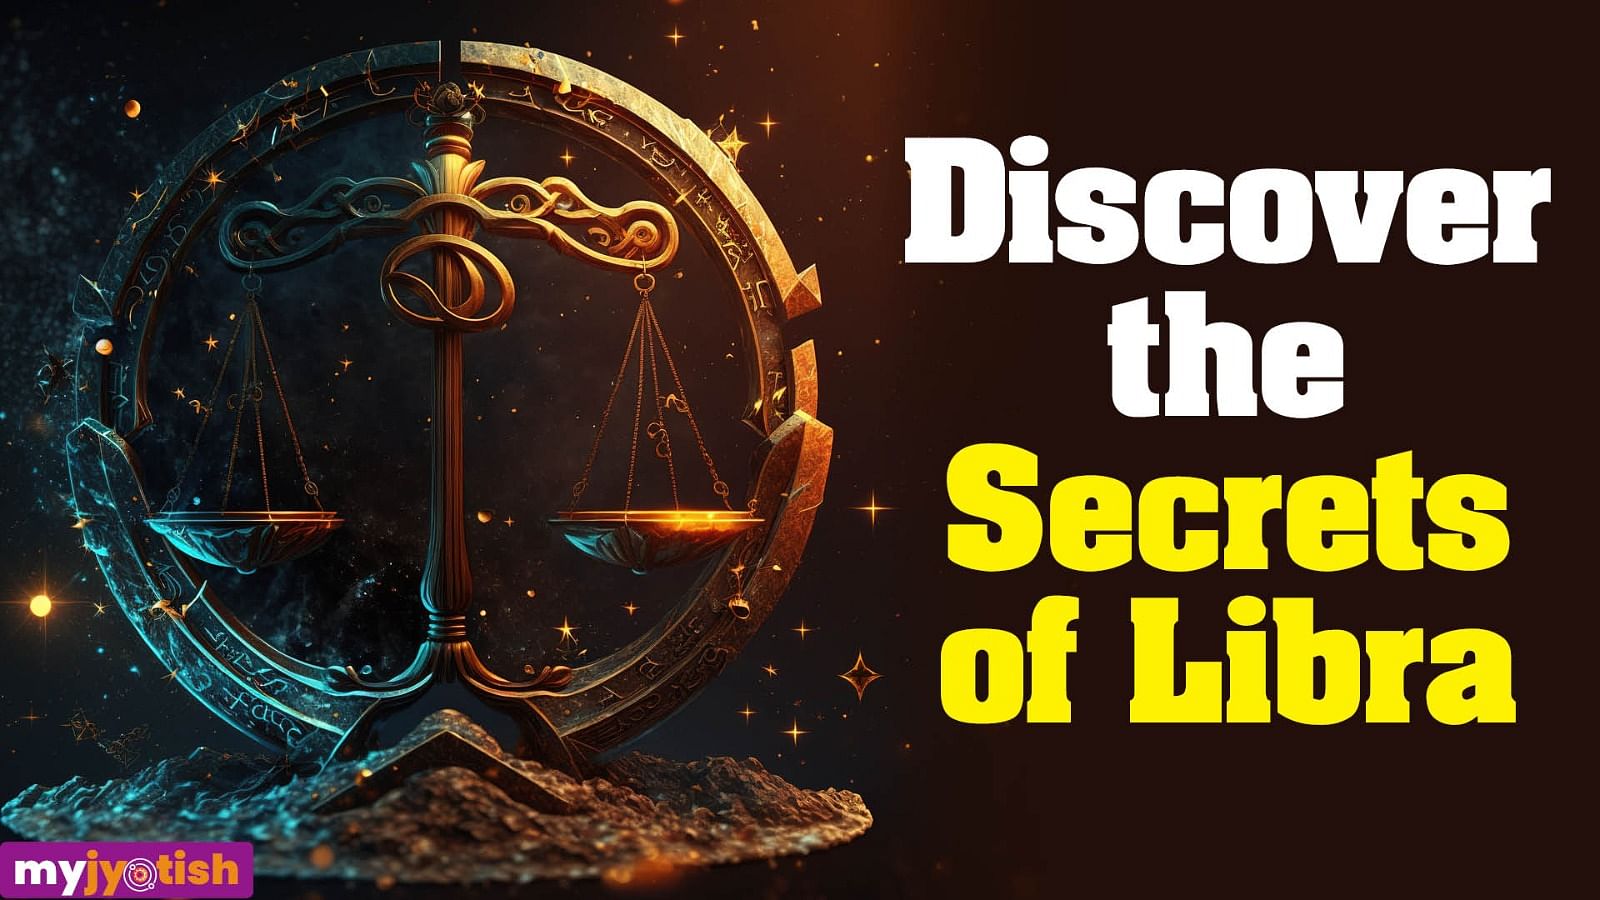 Discover the Secrets of libra